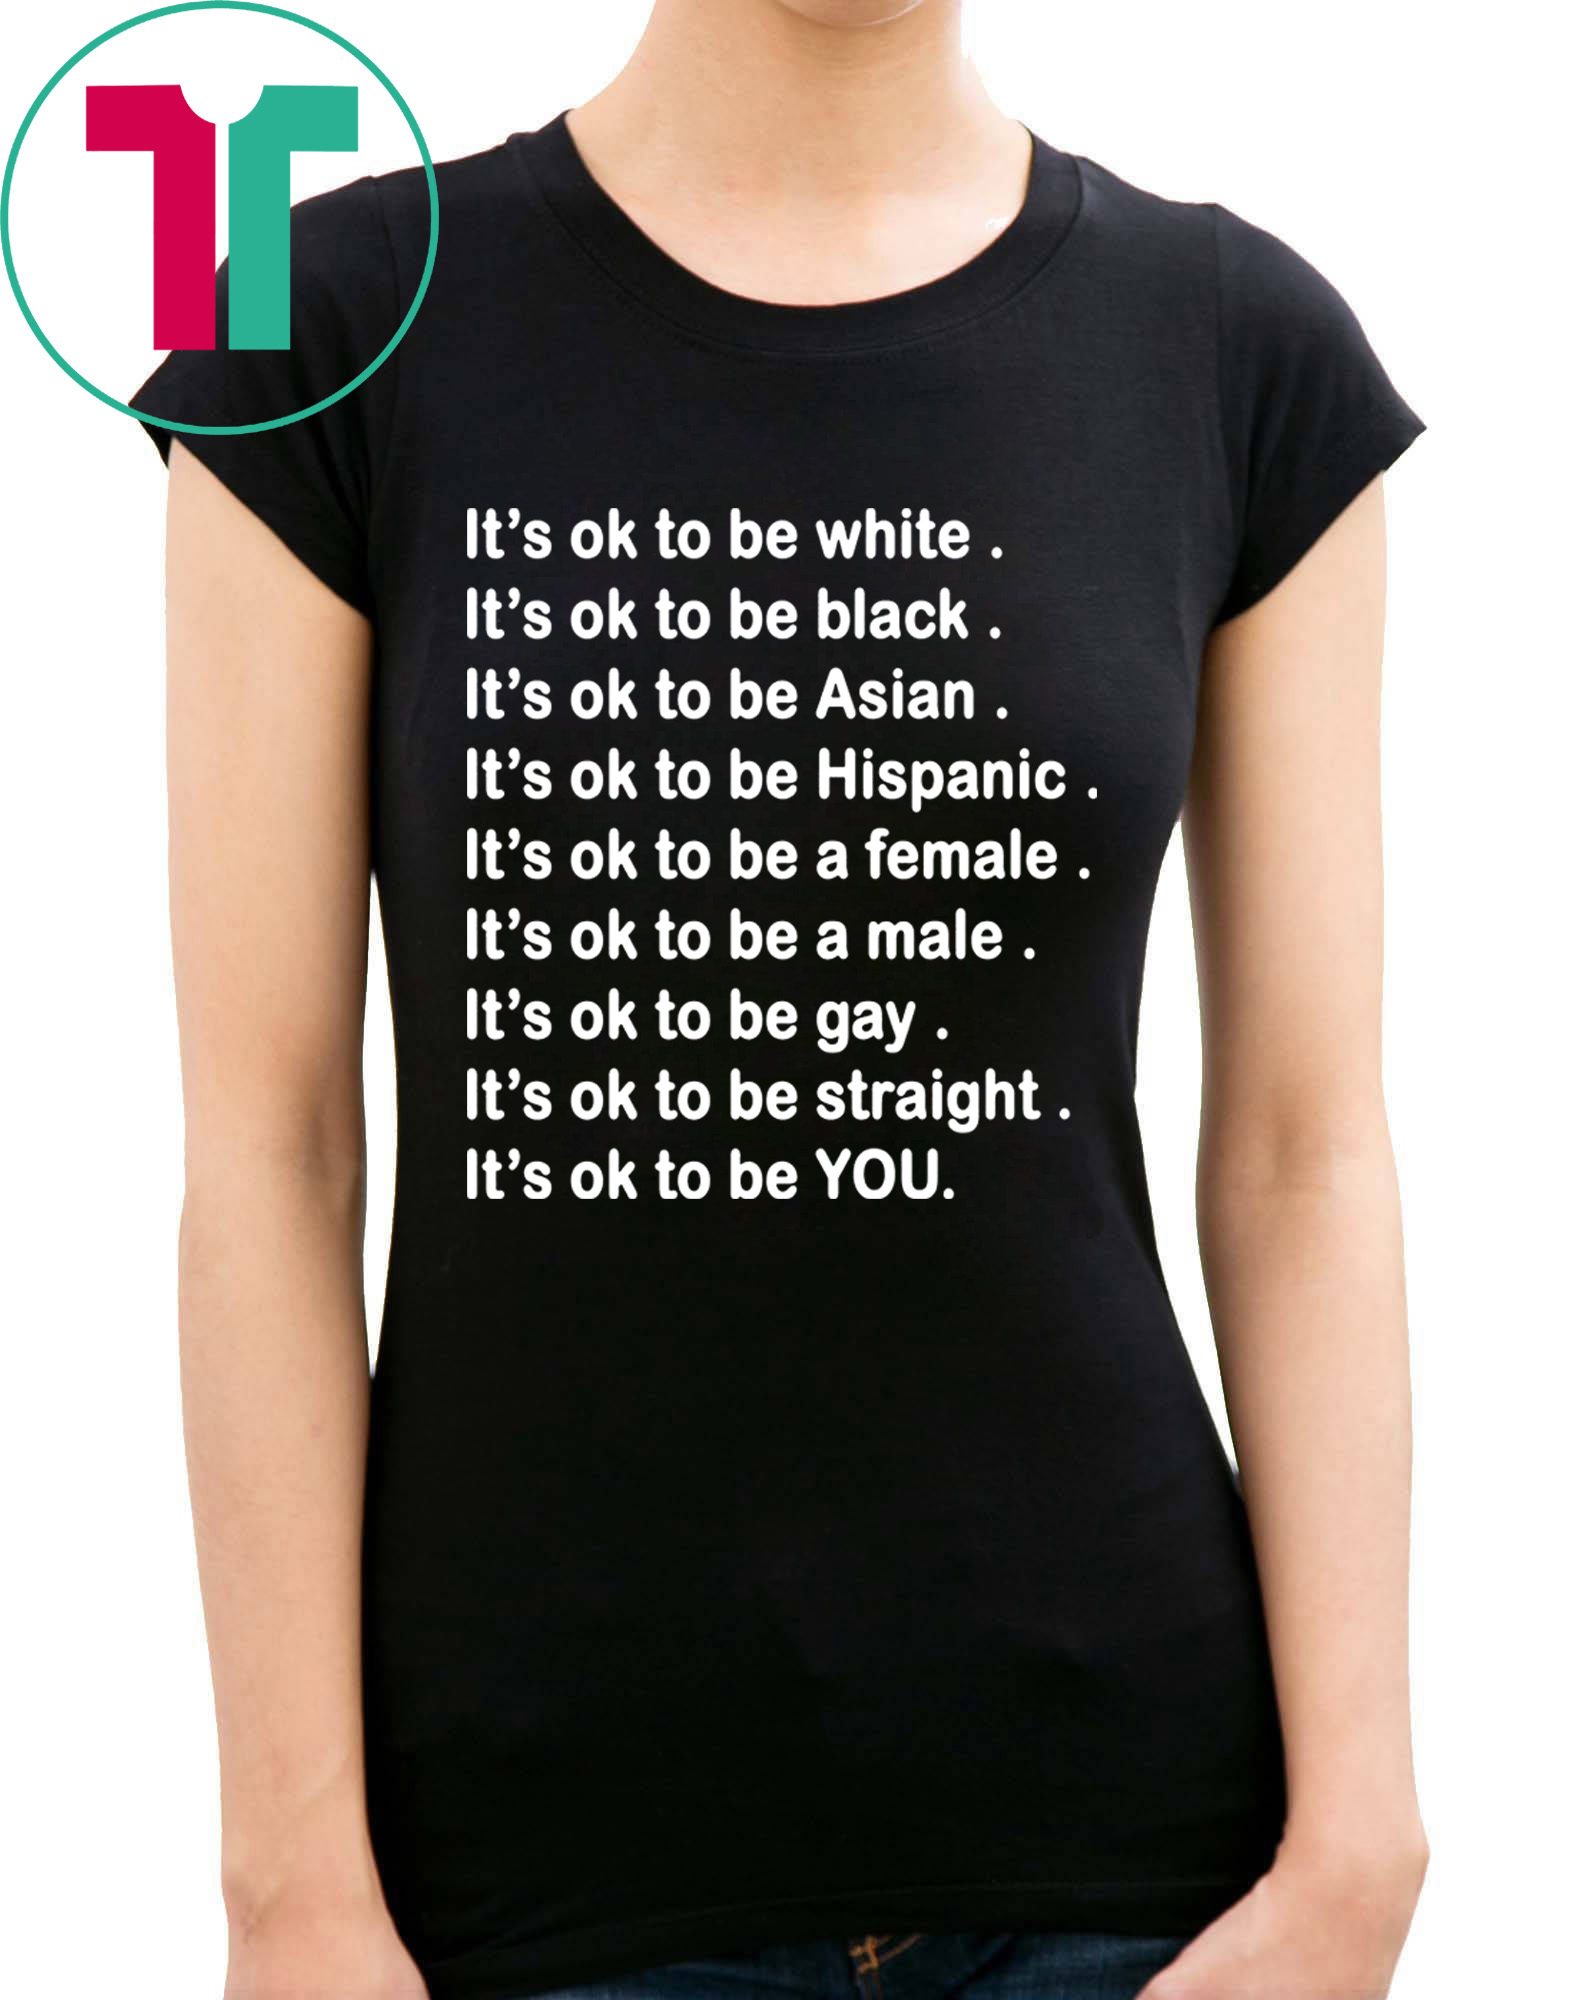 It’s ok to be white, black, Asian, Hispanic, a female, a male, gay ...